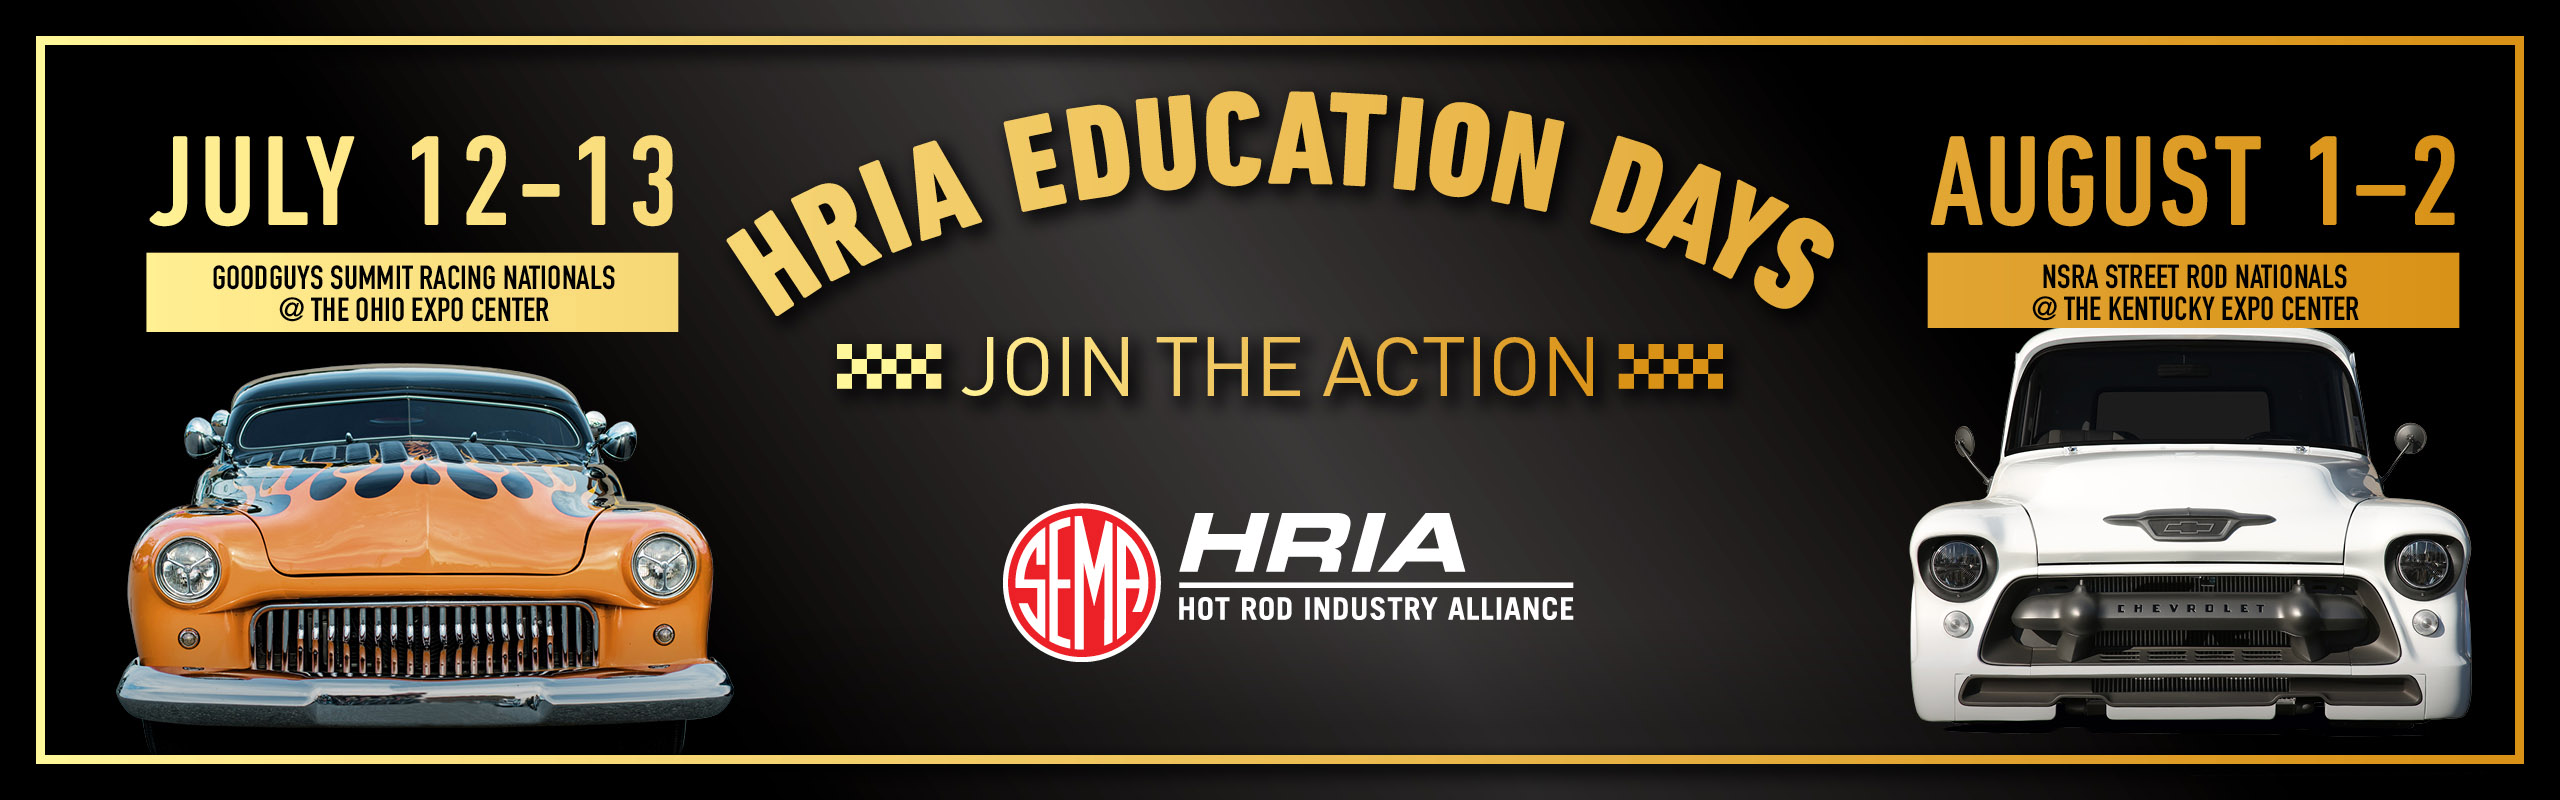 HRIA Education Days